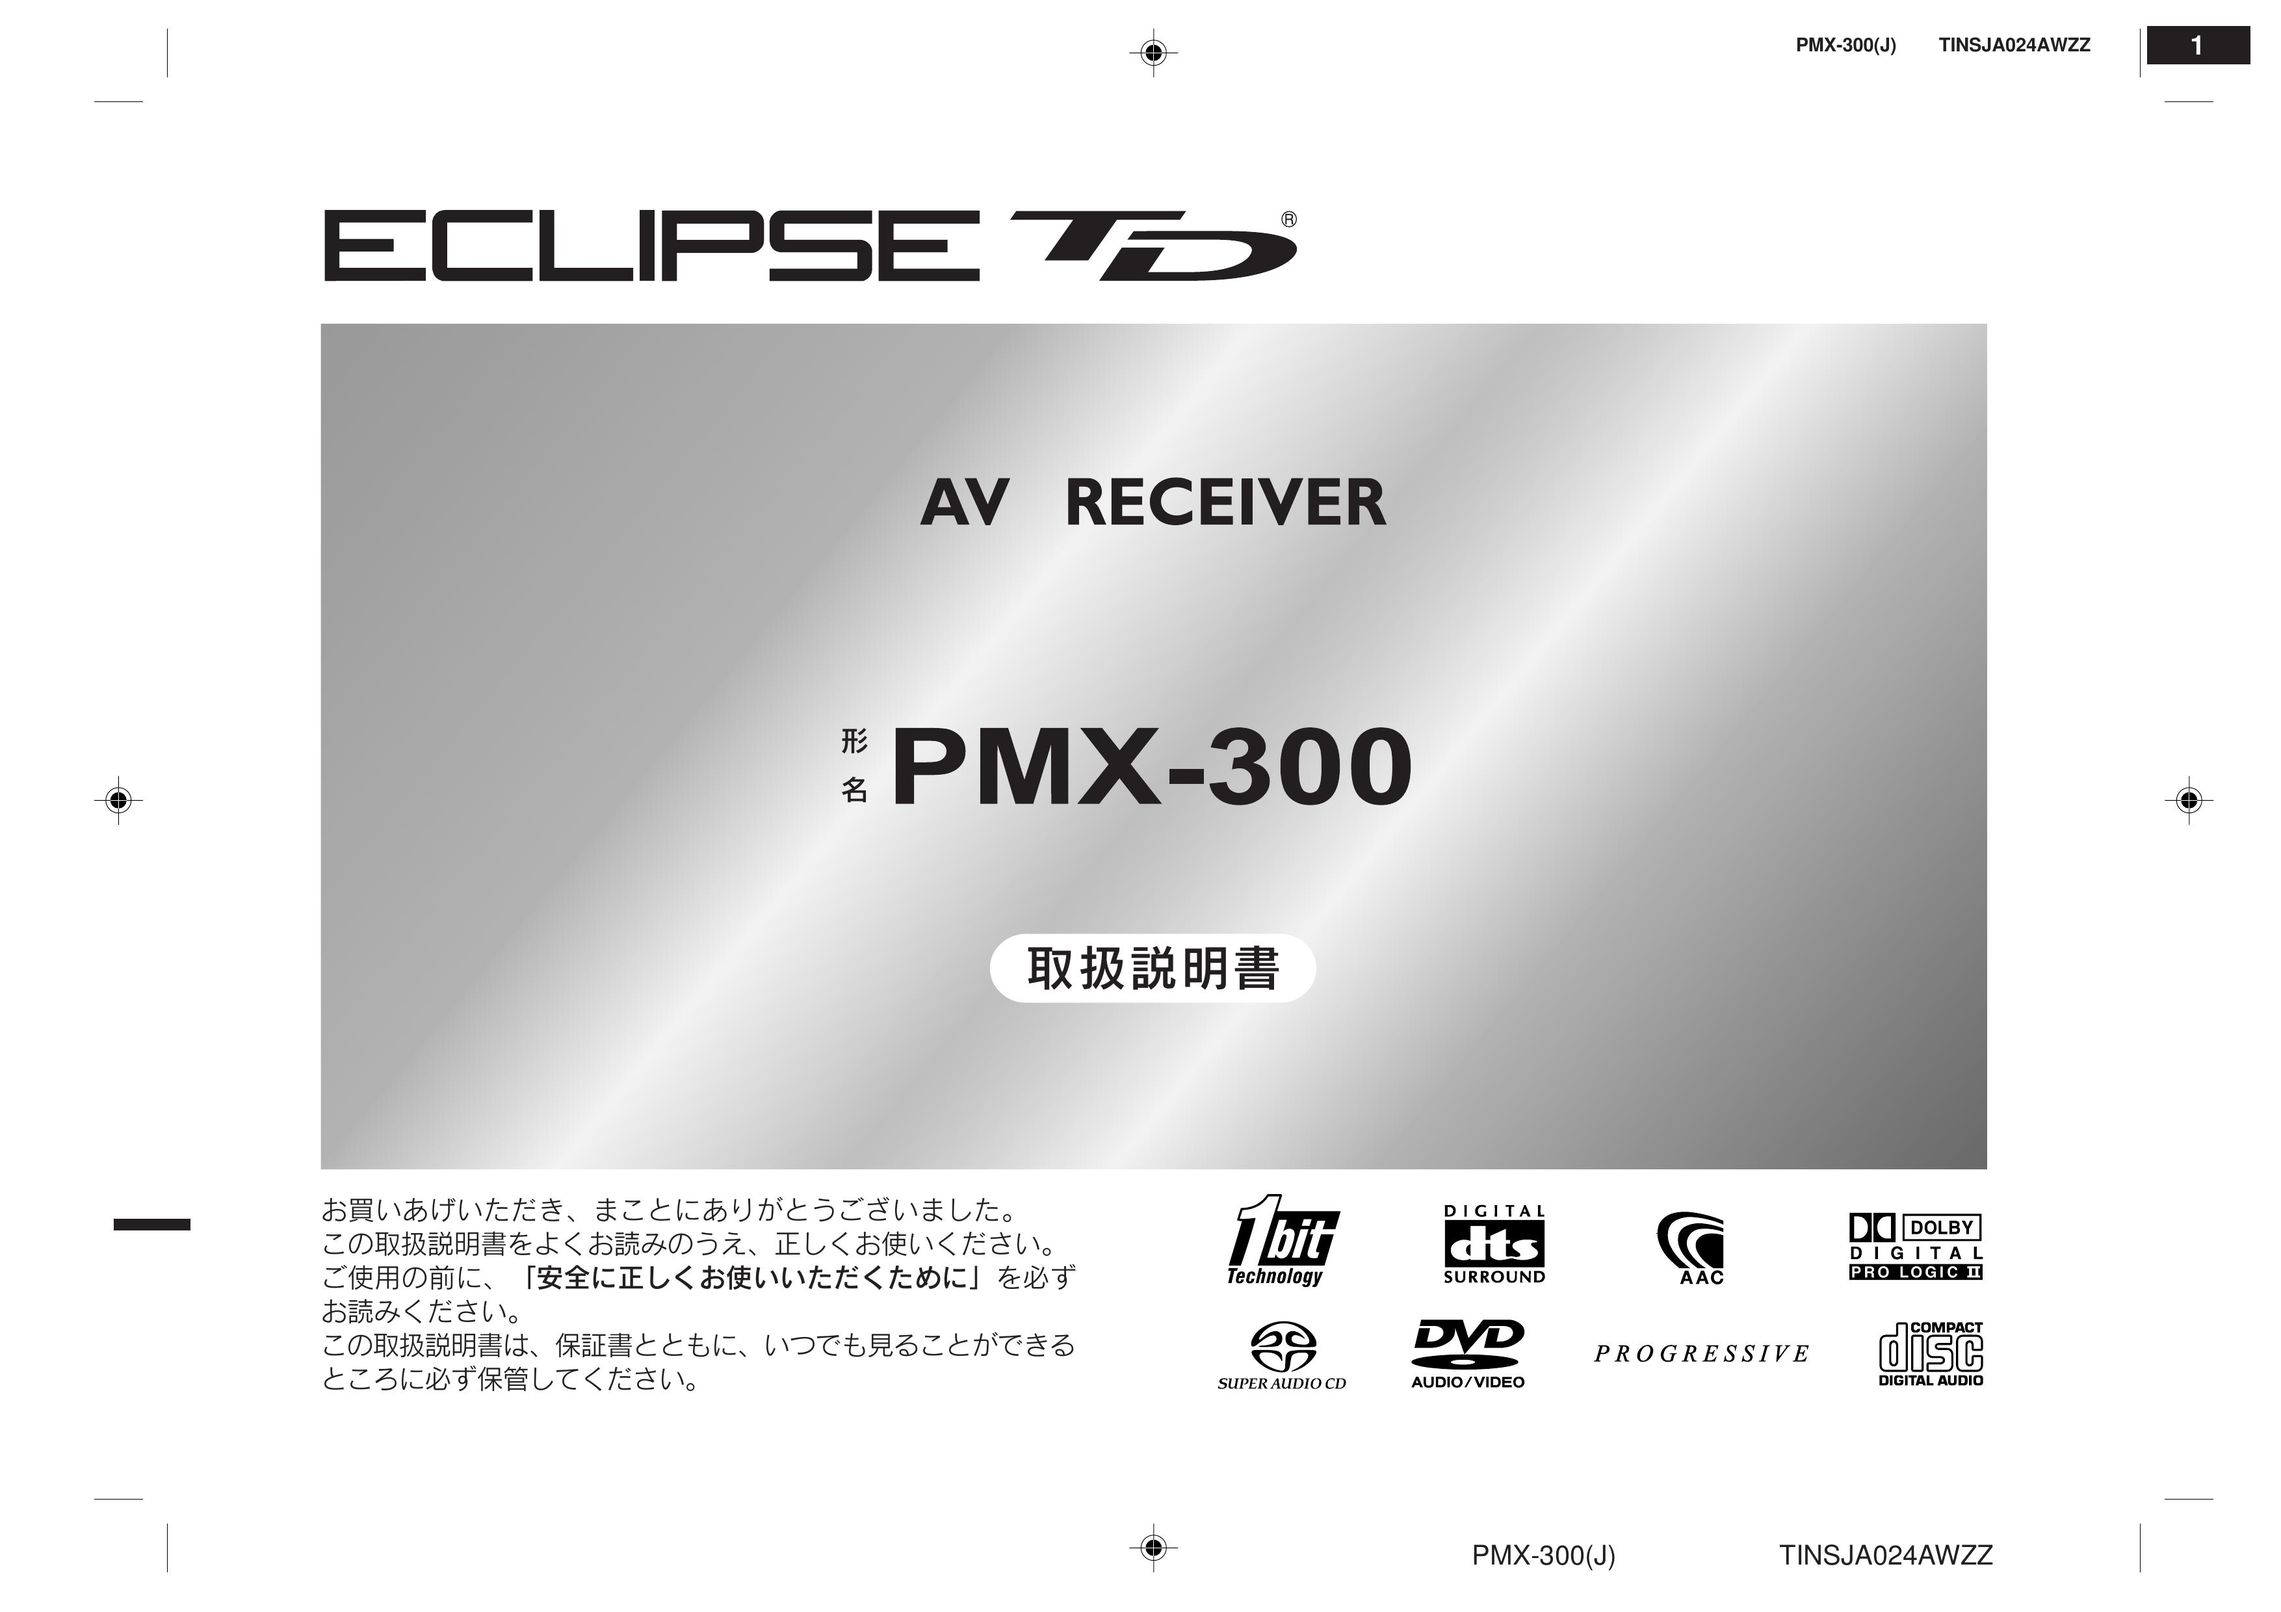 Eclipse - Fujitsu Ten PMX-300 Car Stereo System User Manual